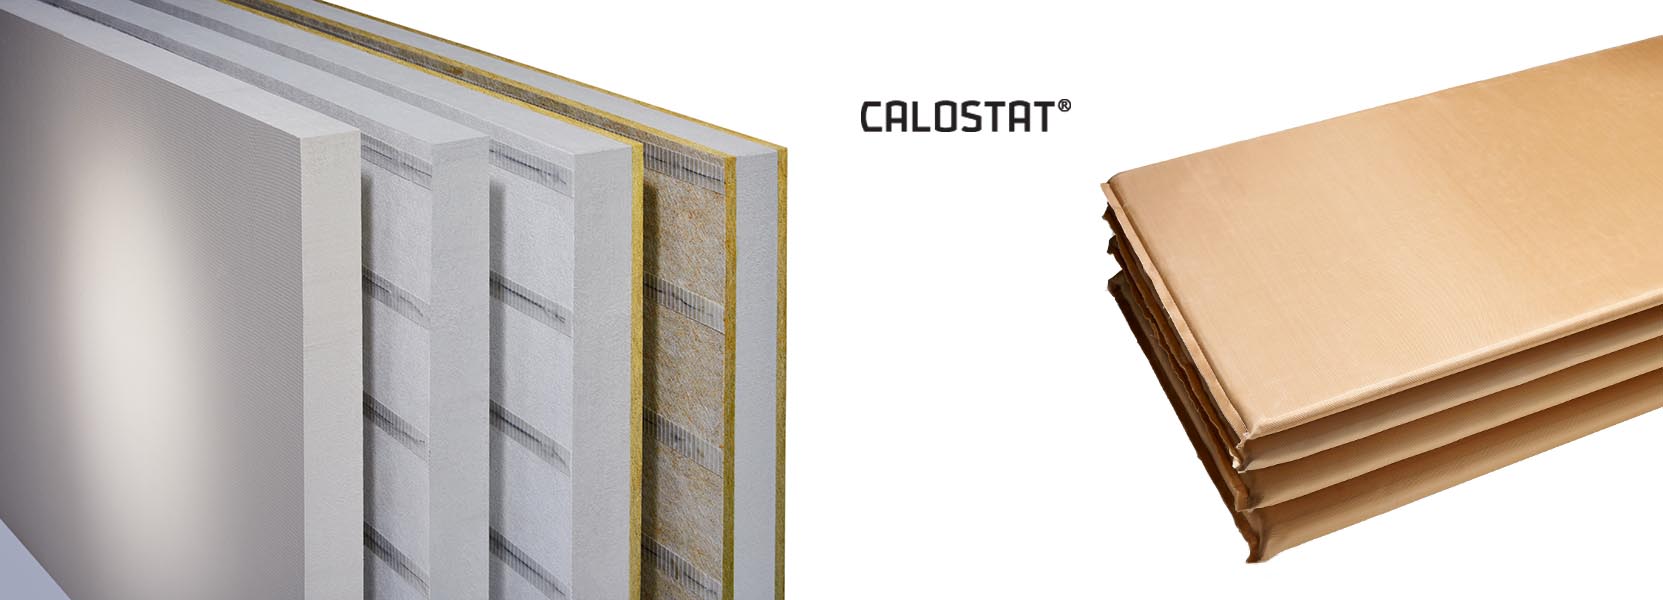 CALOSTAT® Insulation Panel Range and CALOSTAT® PAD